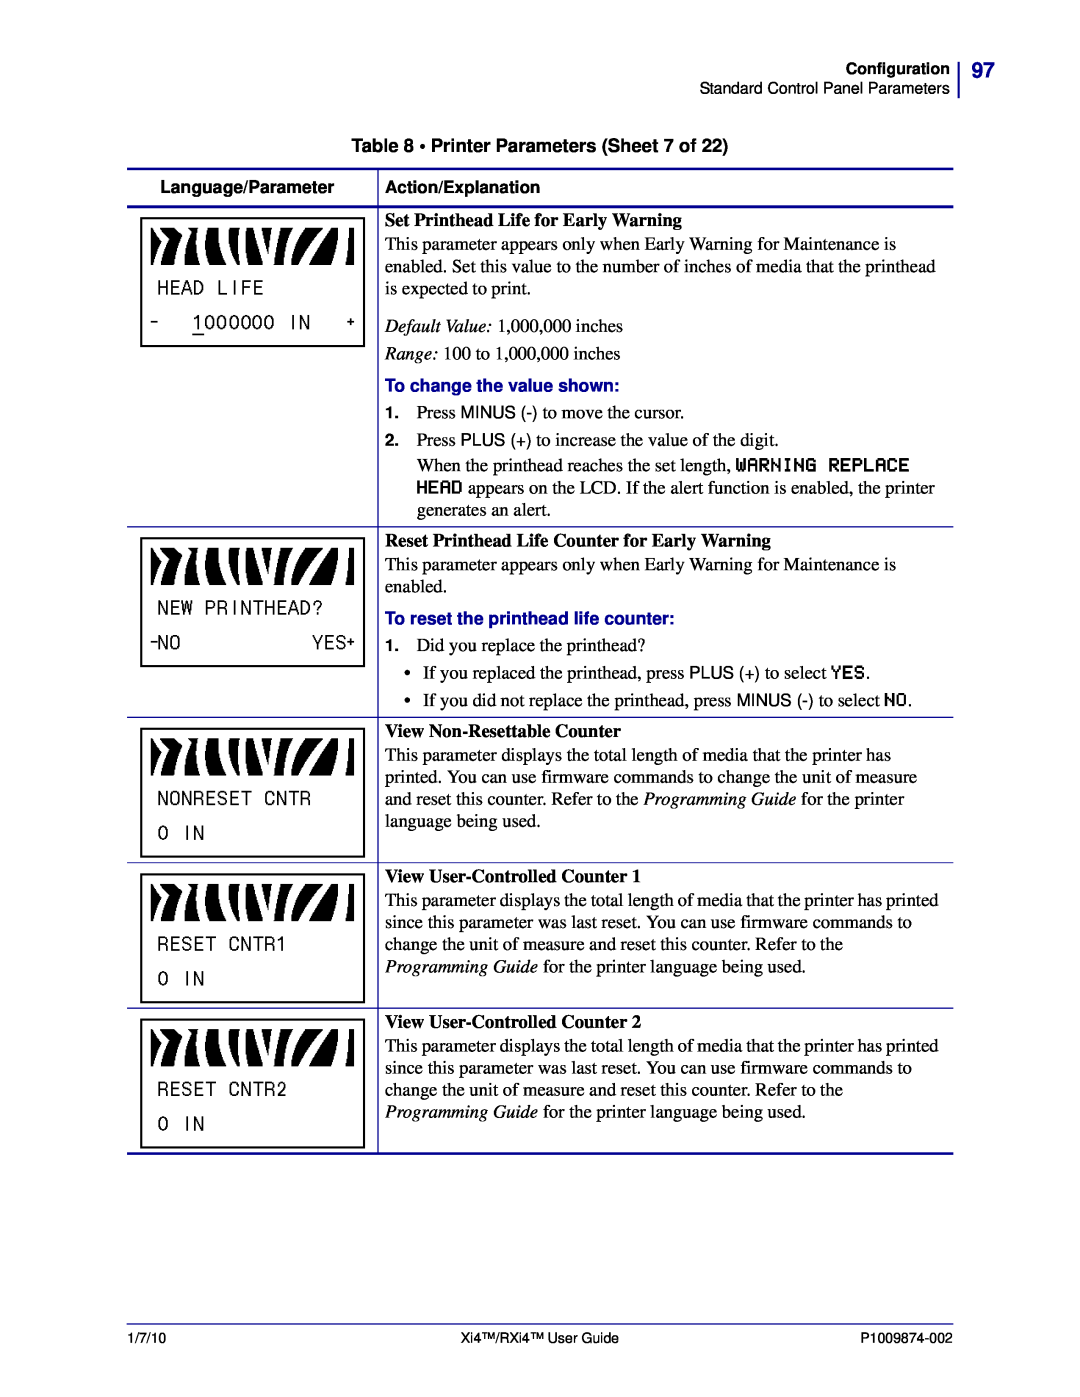 Zebra Technologies 17080100000, XI4TM, 14080100200 manual Printer Parameters Sheet 7 of, Set Printhead Life for Early Warning 